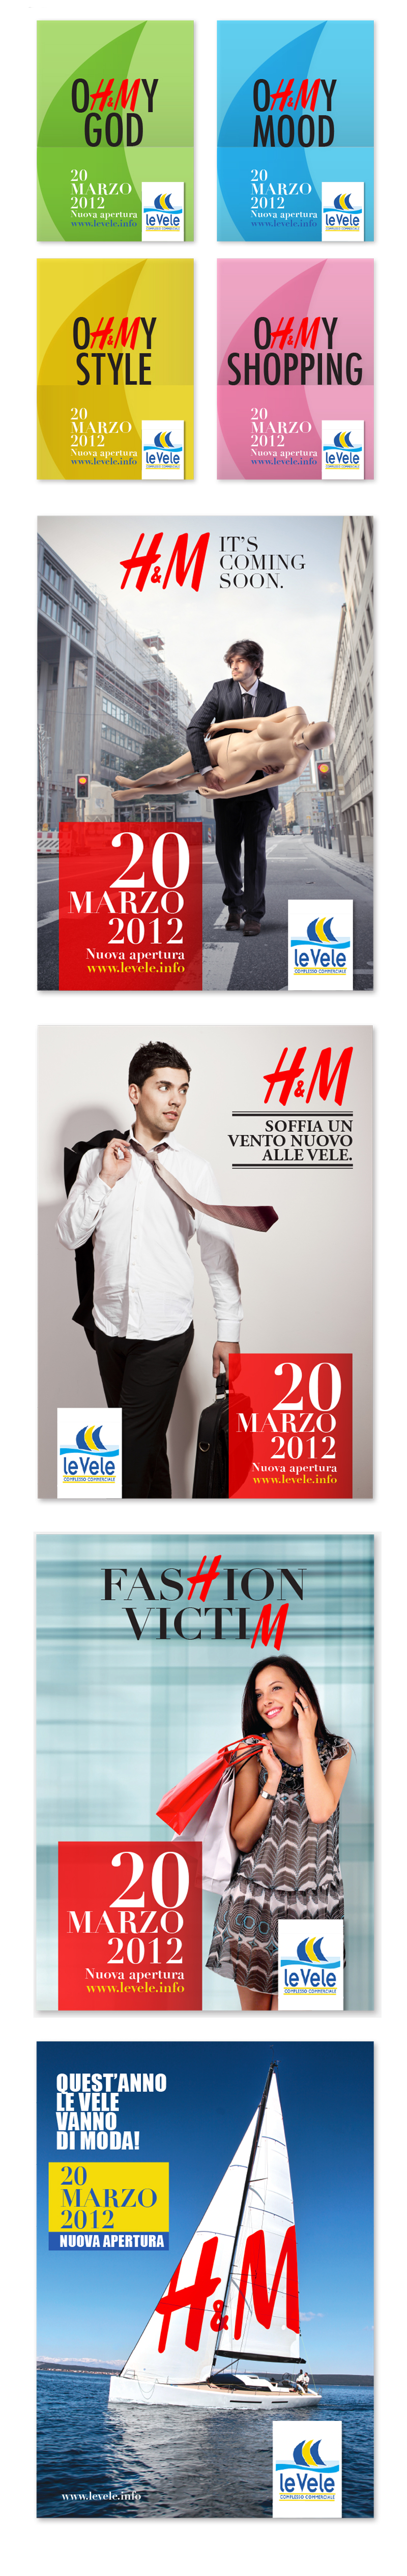 H&M - Apertura alle Vele Desenzano